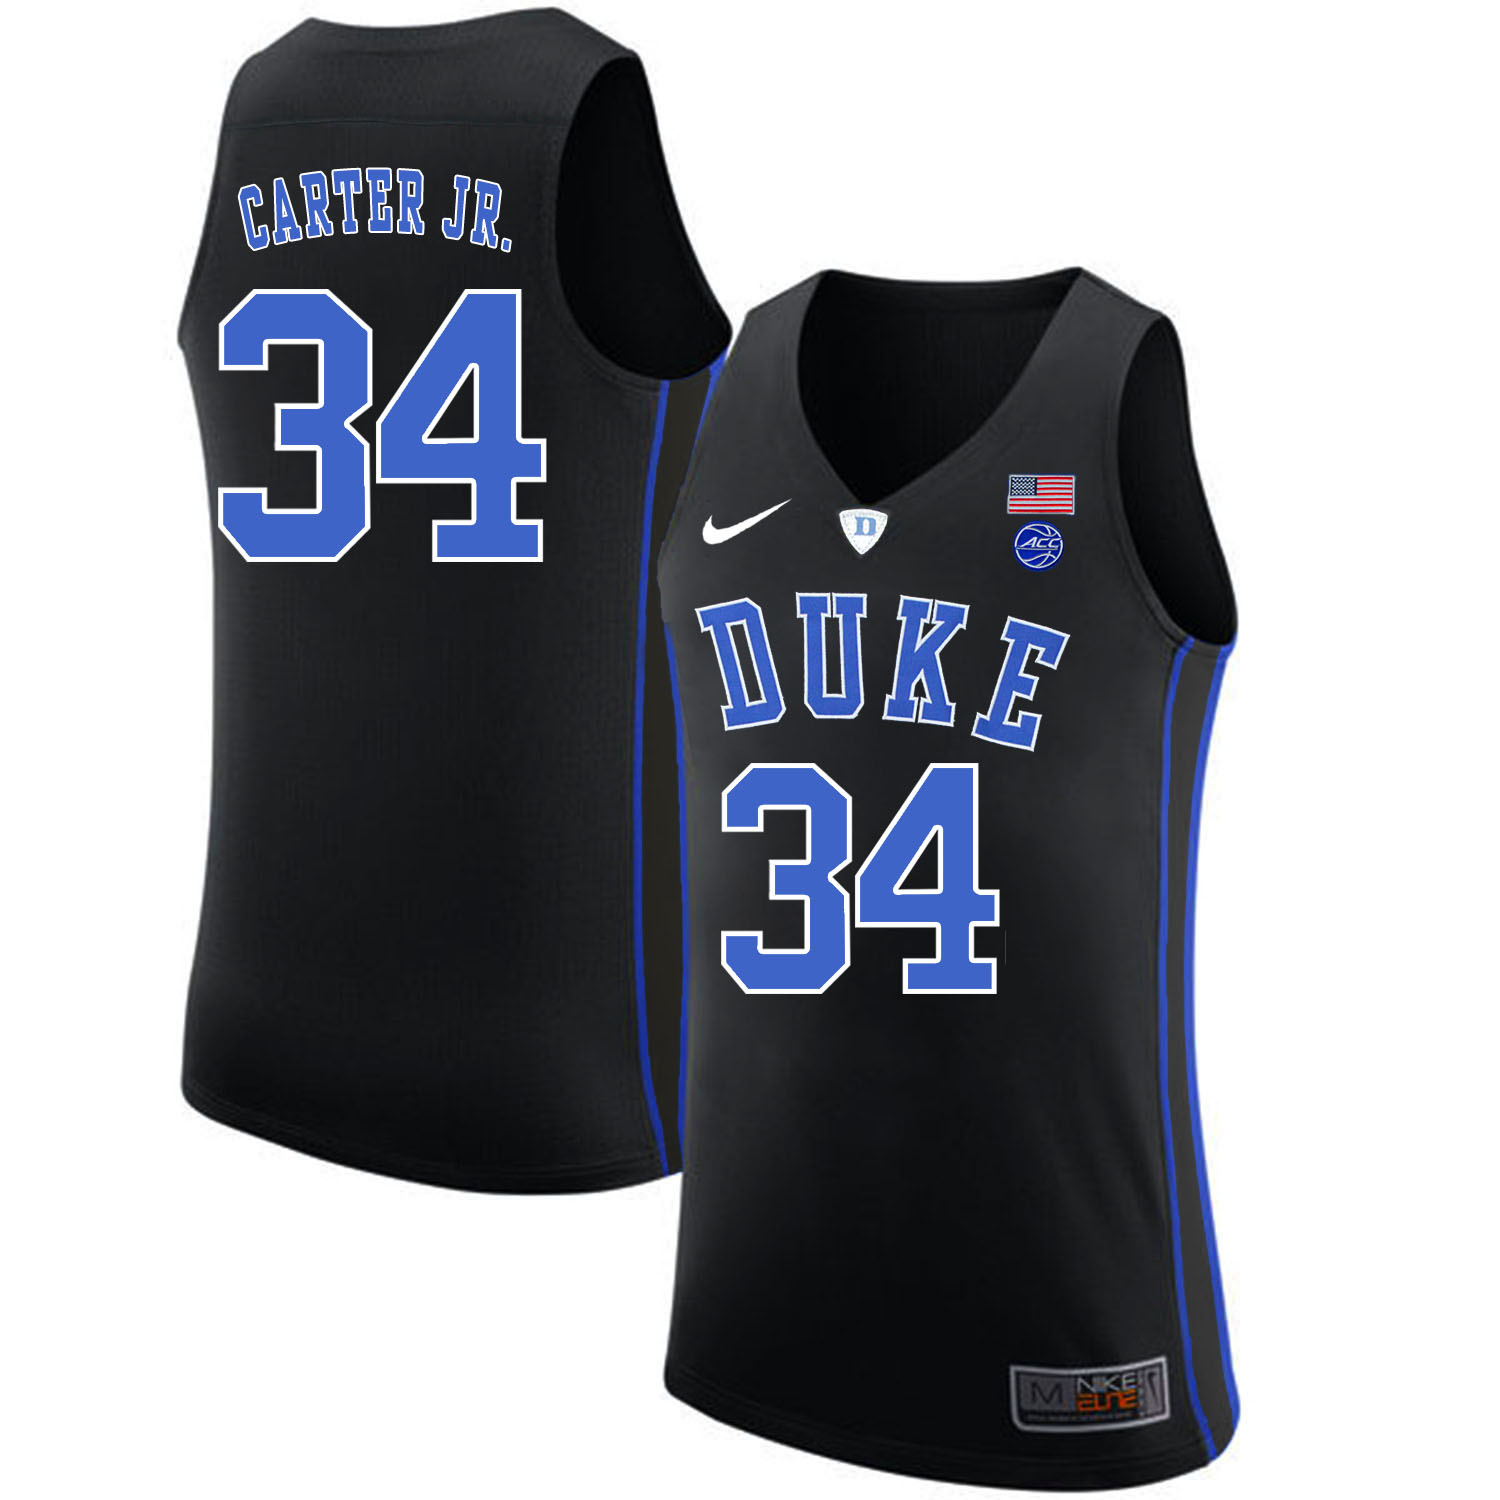 Duke Blue Devils 34 Wendell Carter Jr. Black Nike College Basketball Jersey